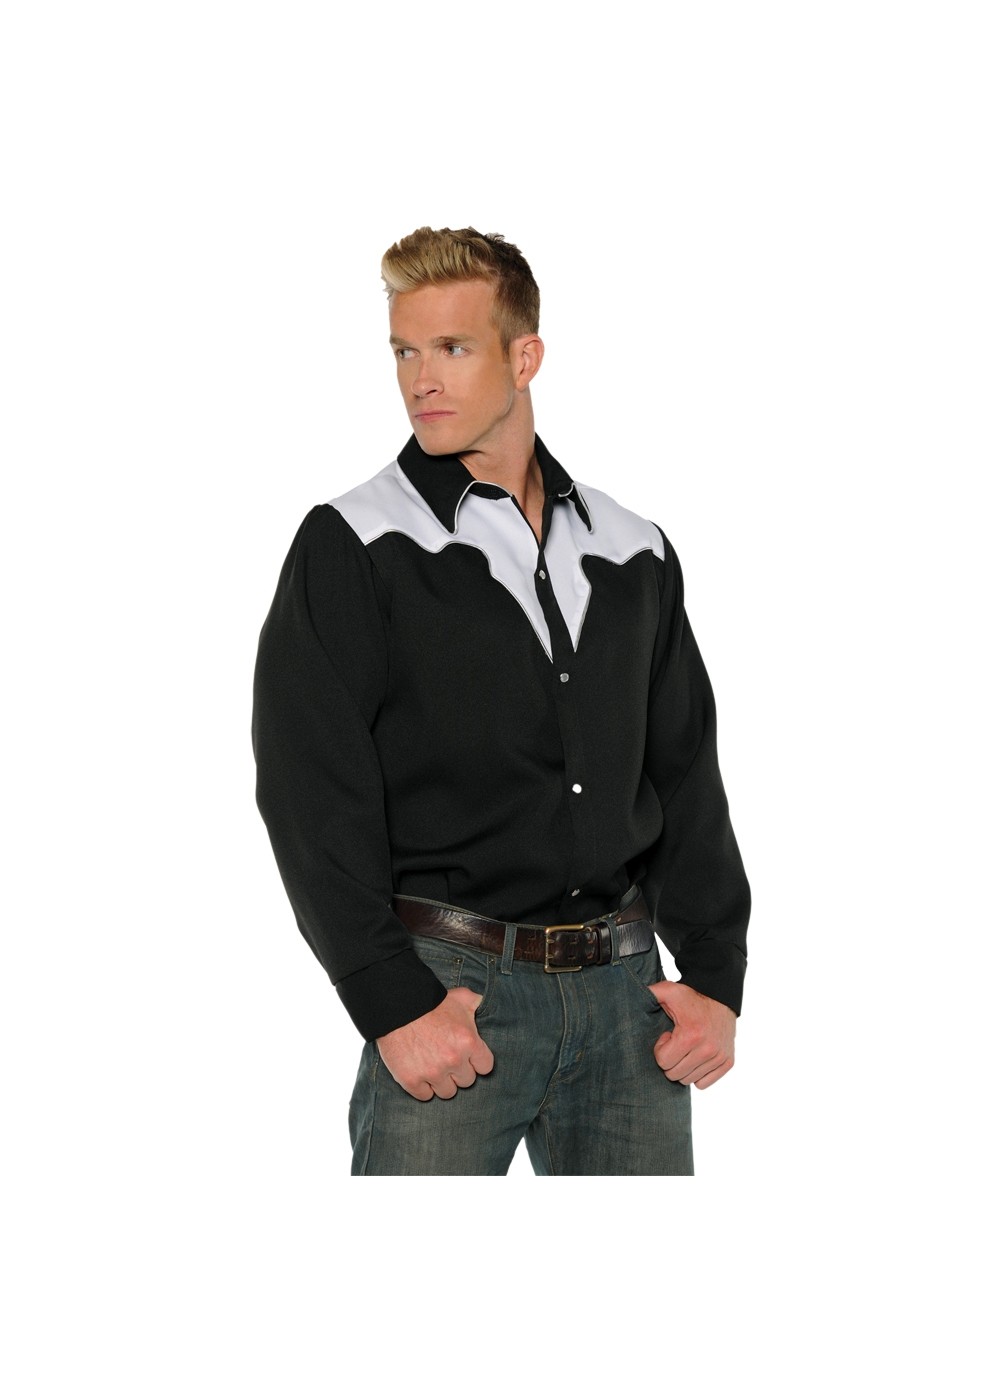 Mens Cowboy Shirt Black/white - Accessories